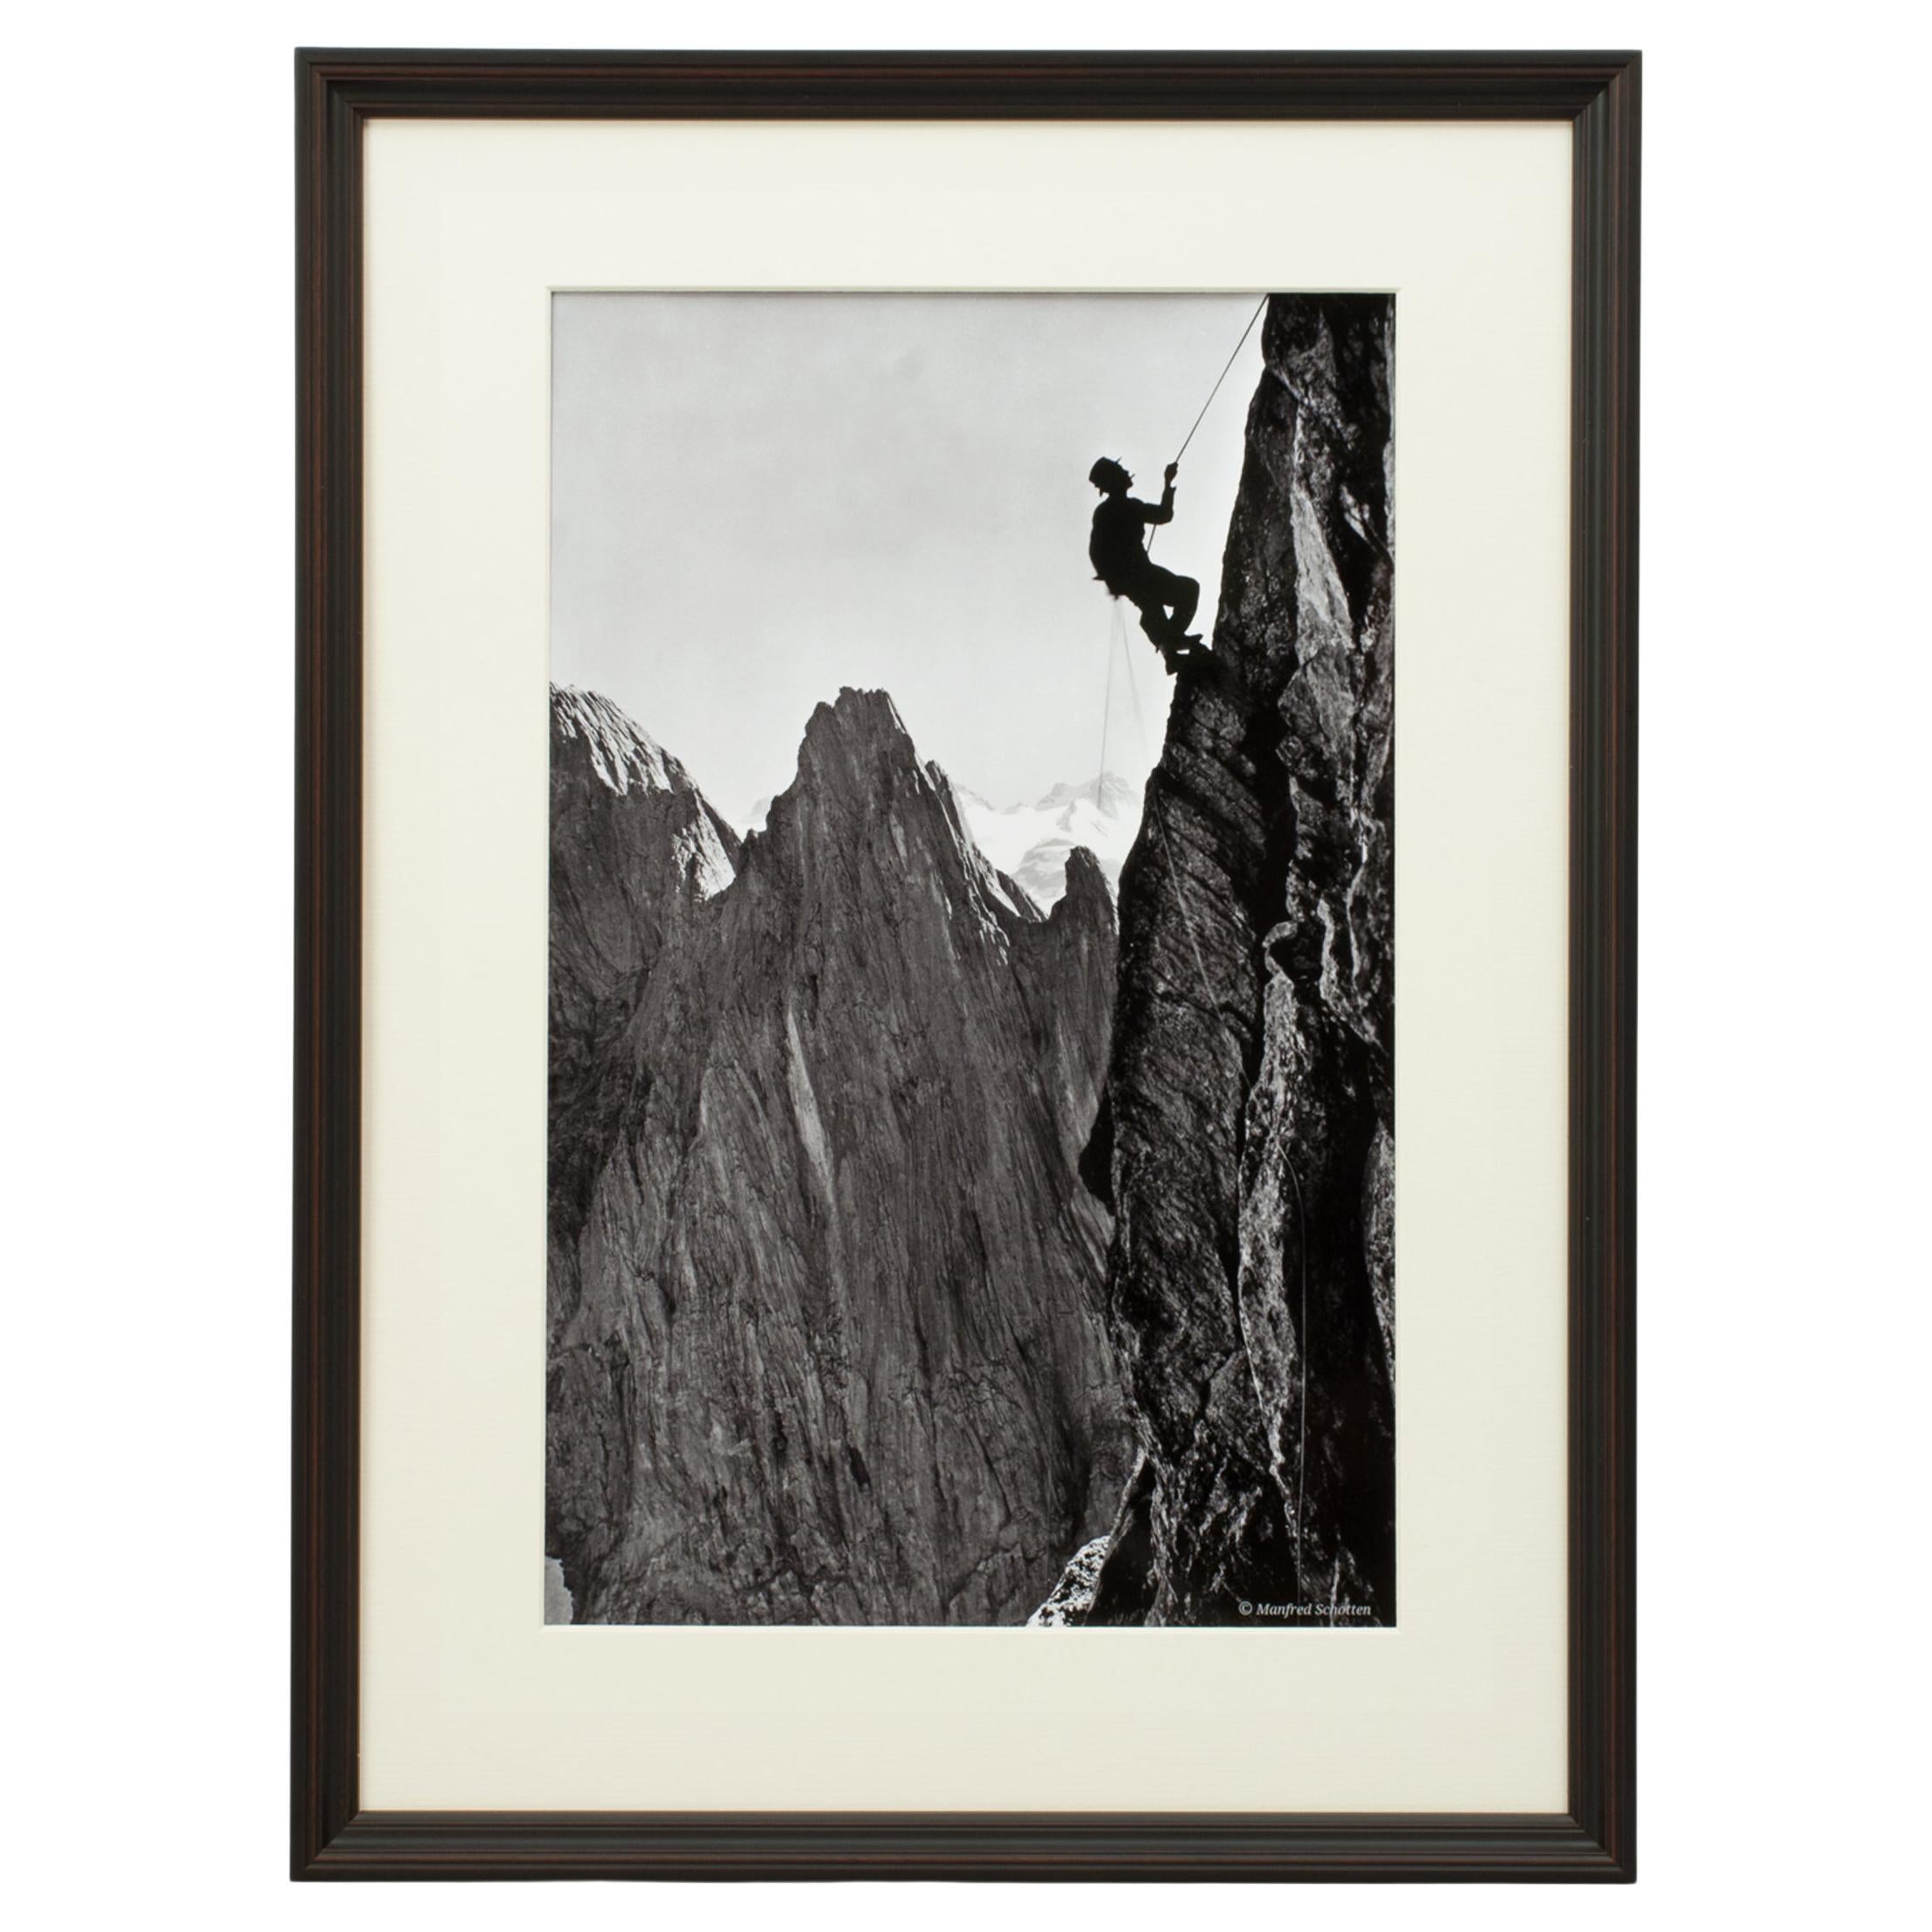 Vintage Style Photography, Framed Alpine Ski Photograph, The Climber